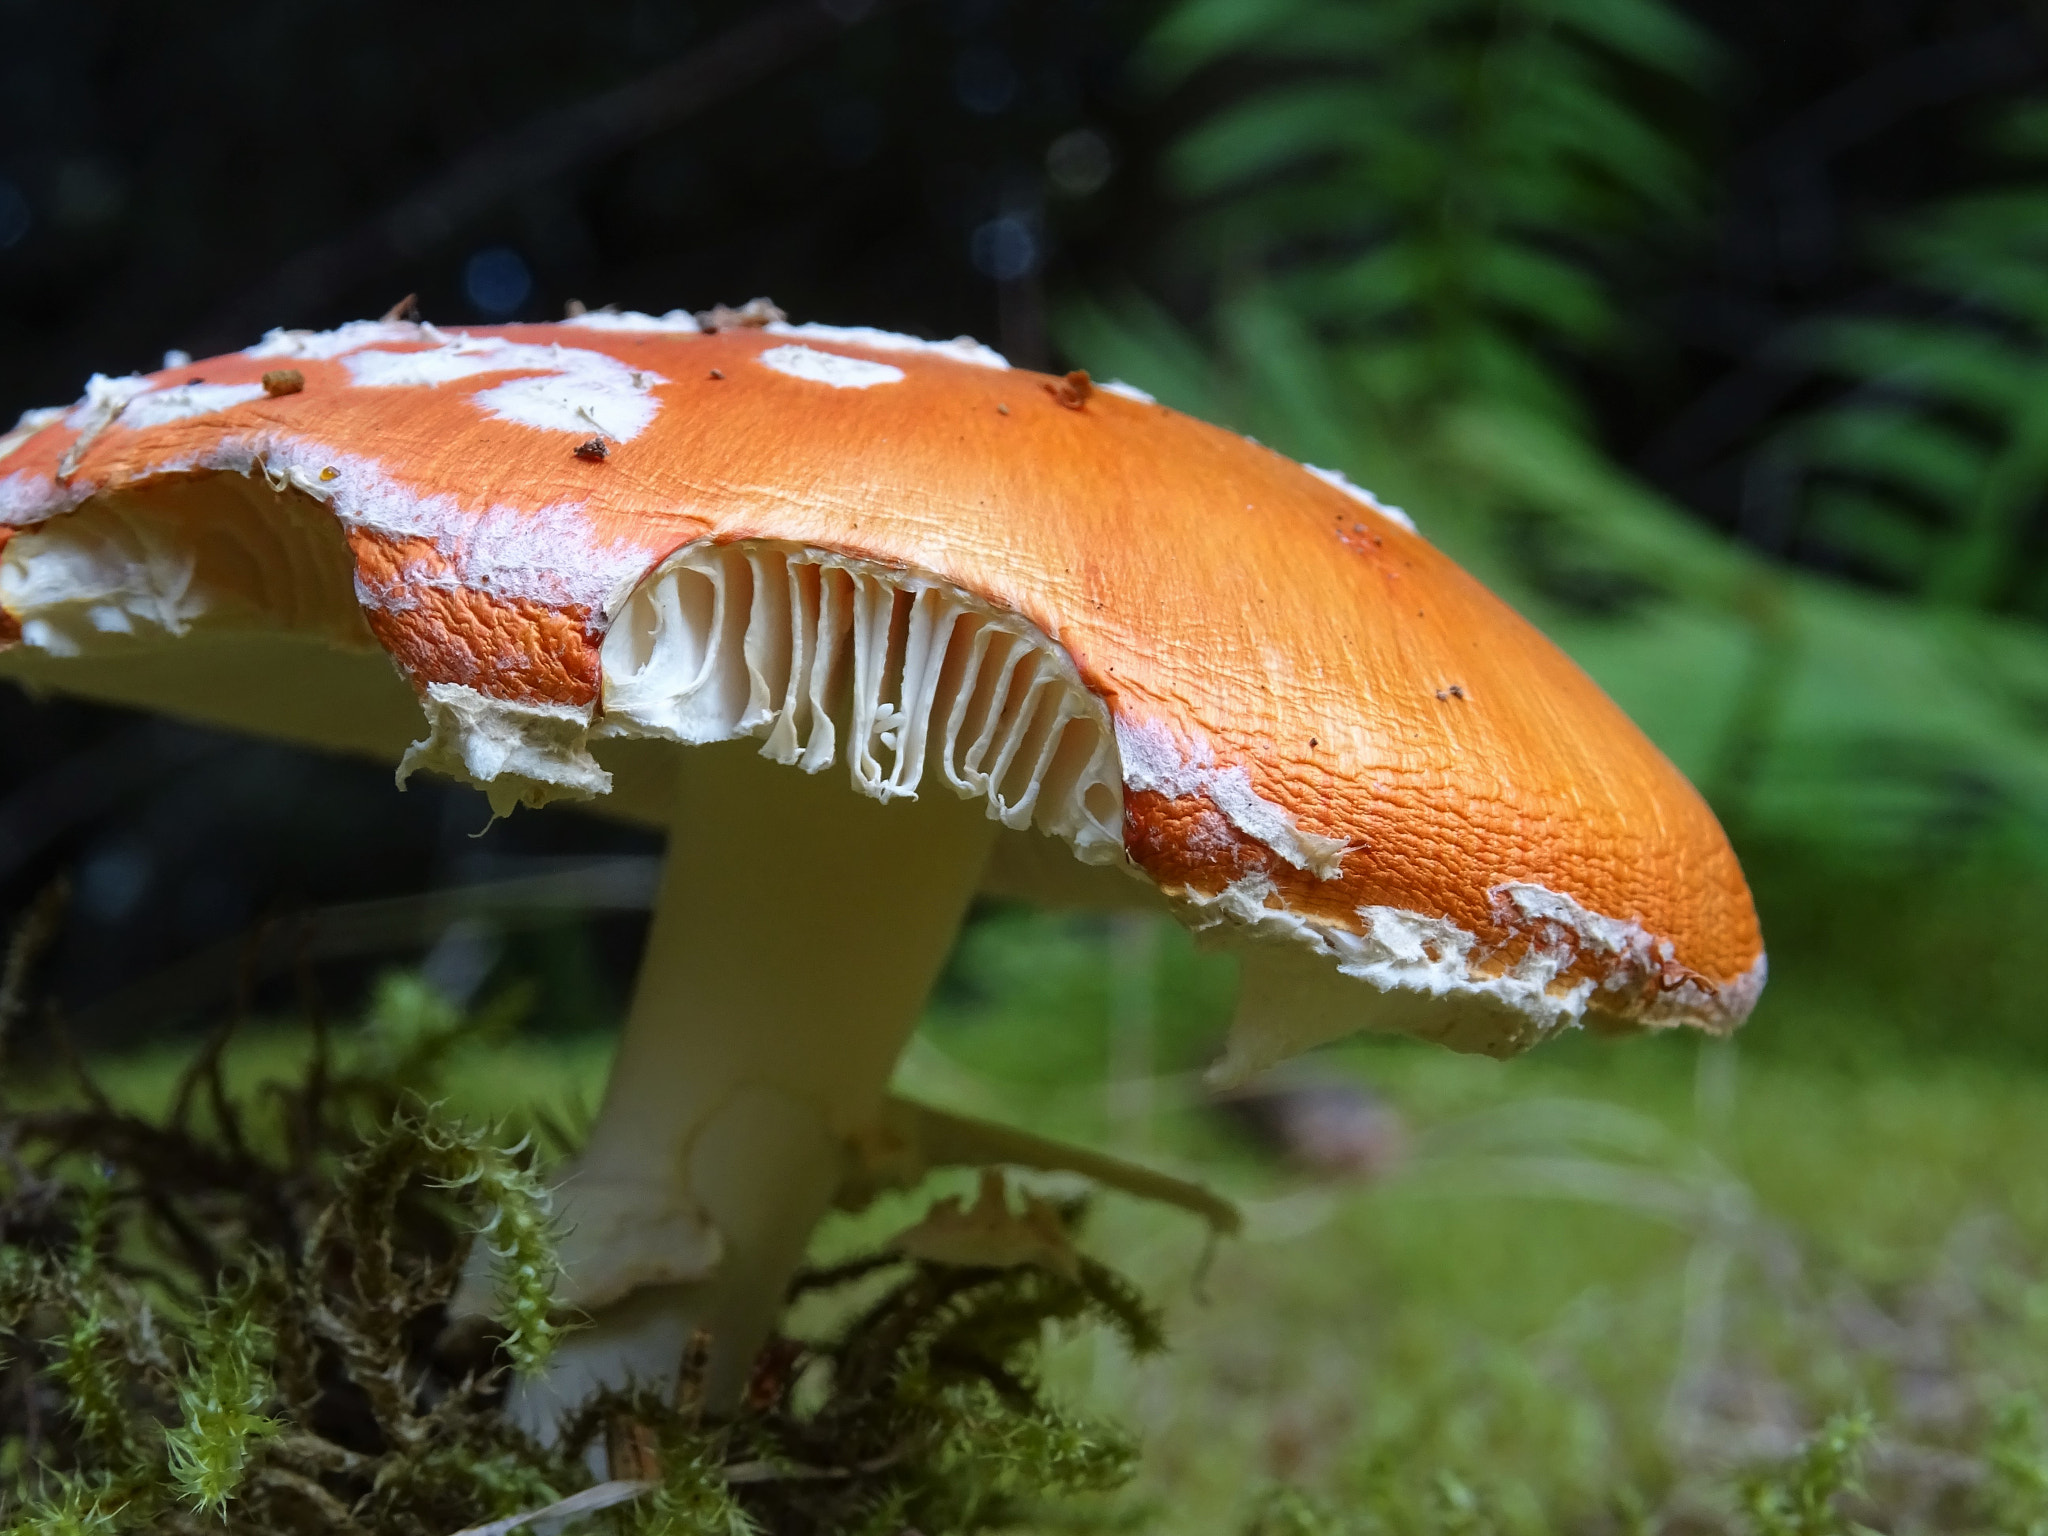 pretty poisonous mushroom